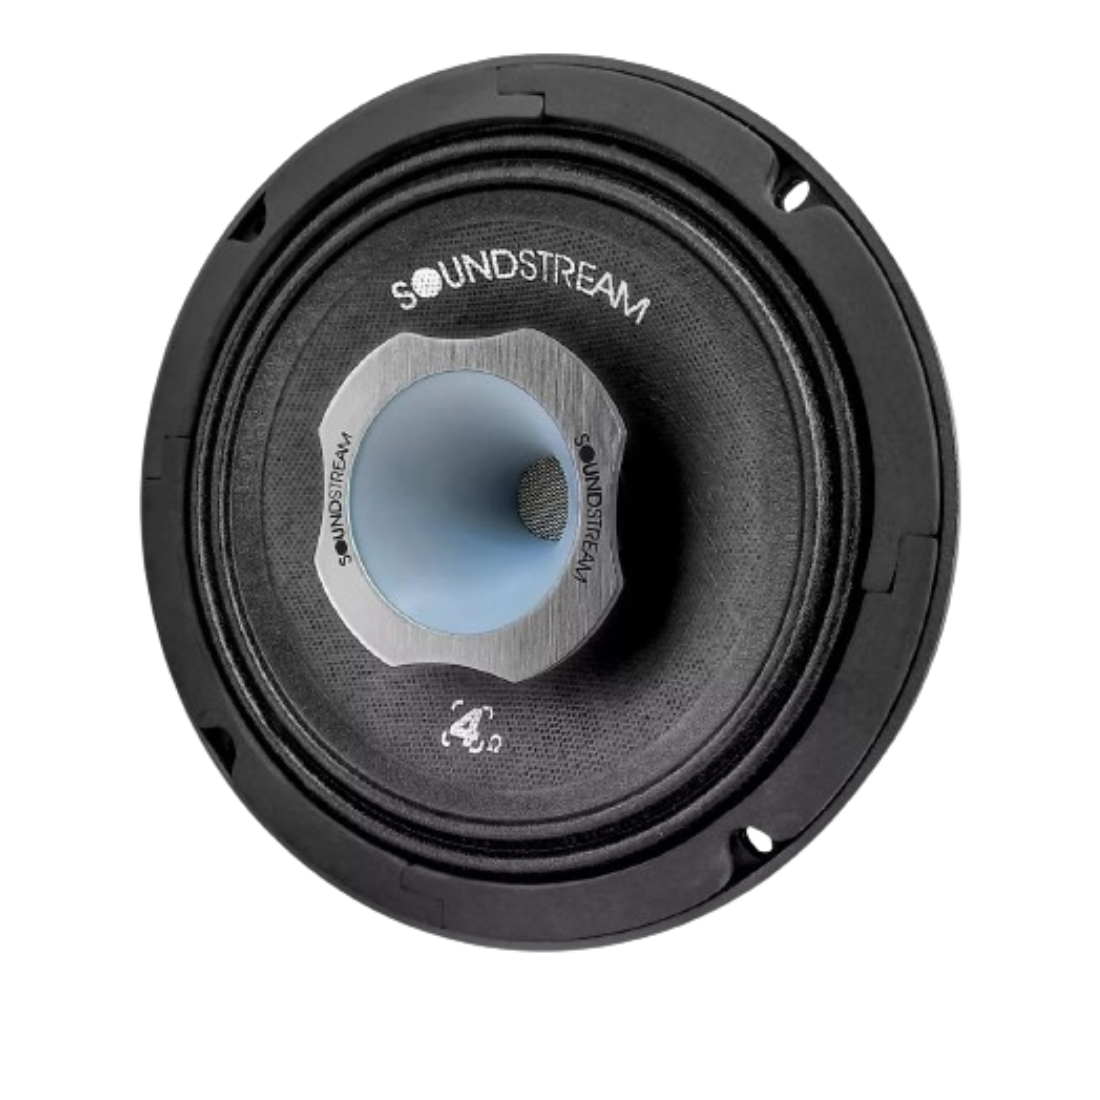 Soundstream SM2P.654 6.5" 2-Way 250W Pro-Audio Speaker w/ Compression Tweeter